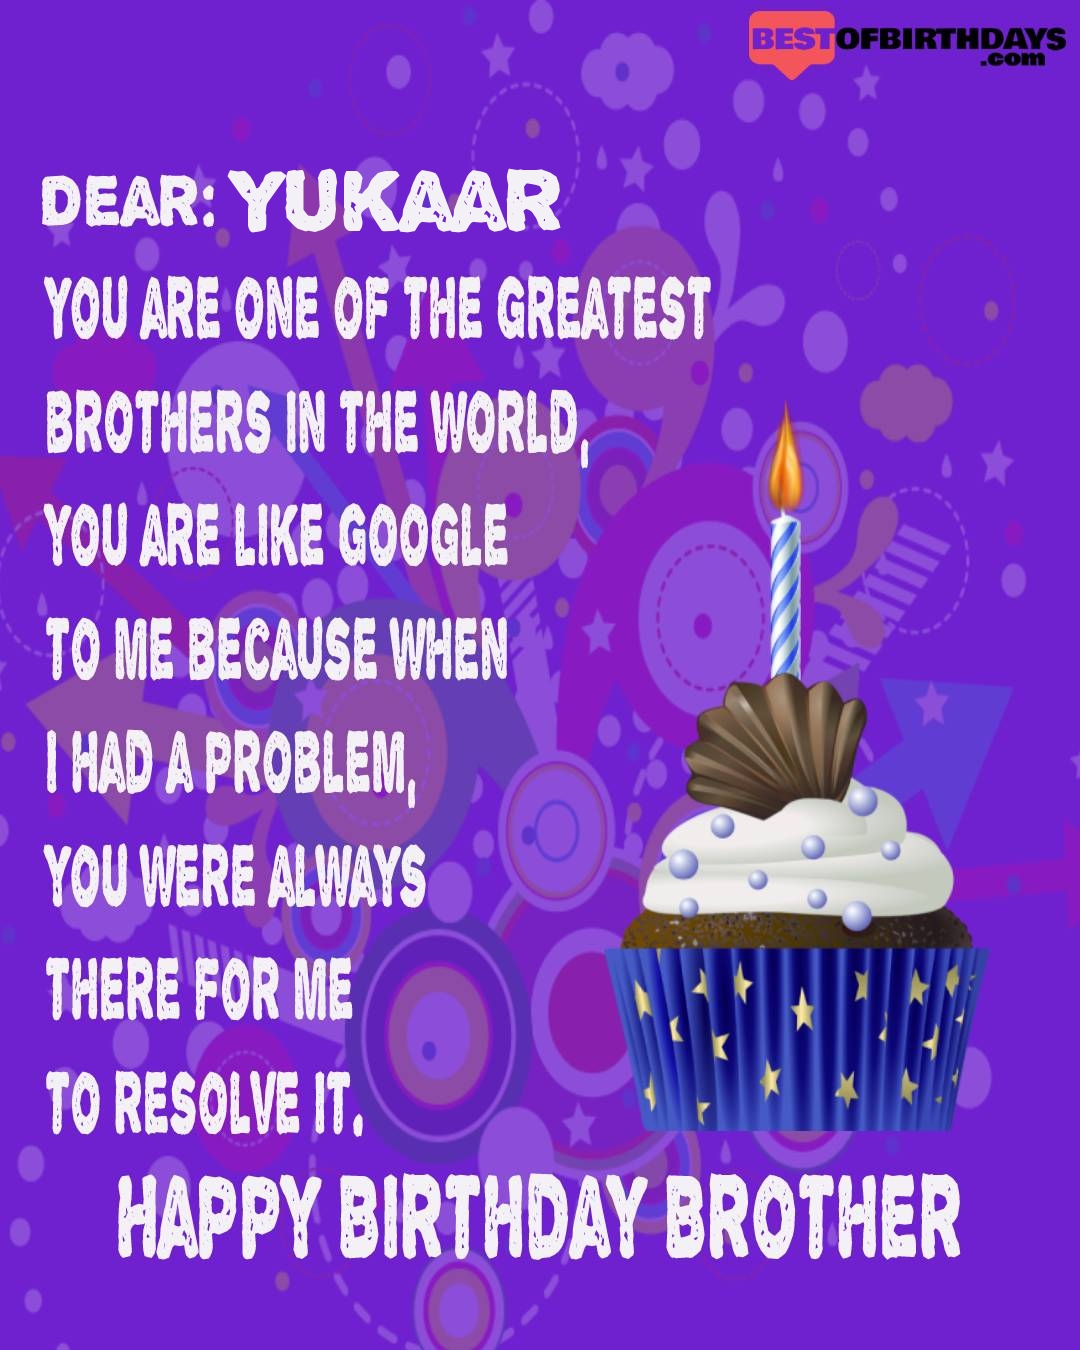 Happy birthday yukaar bhai brother bro